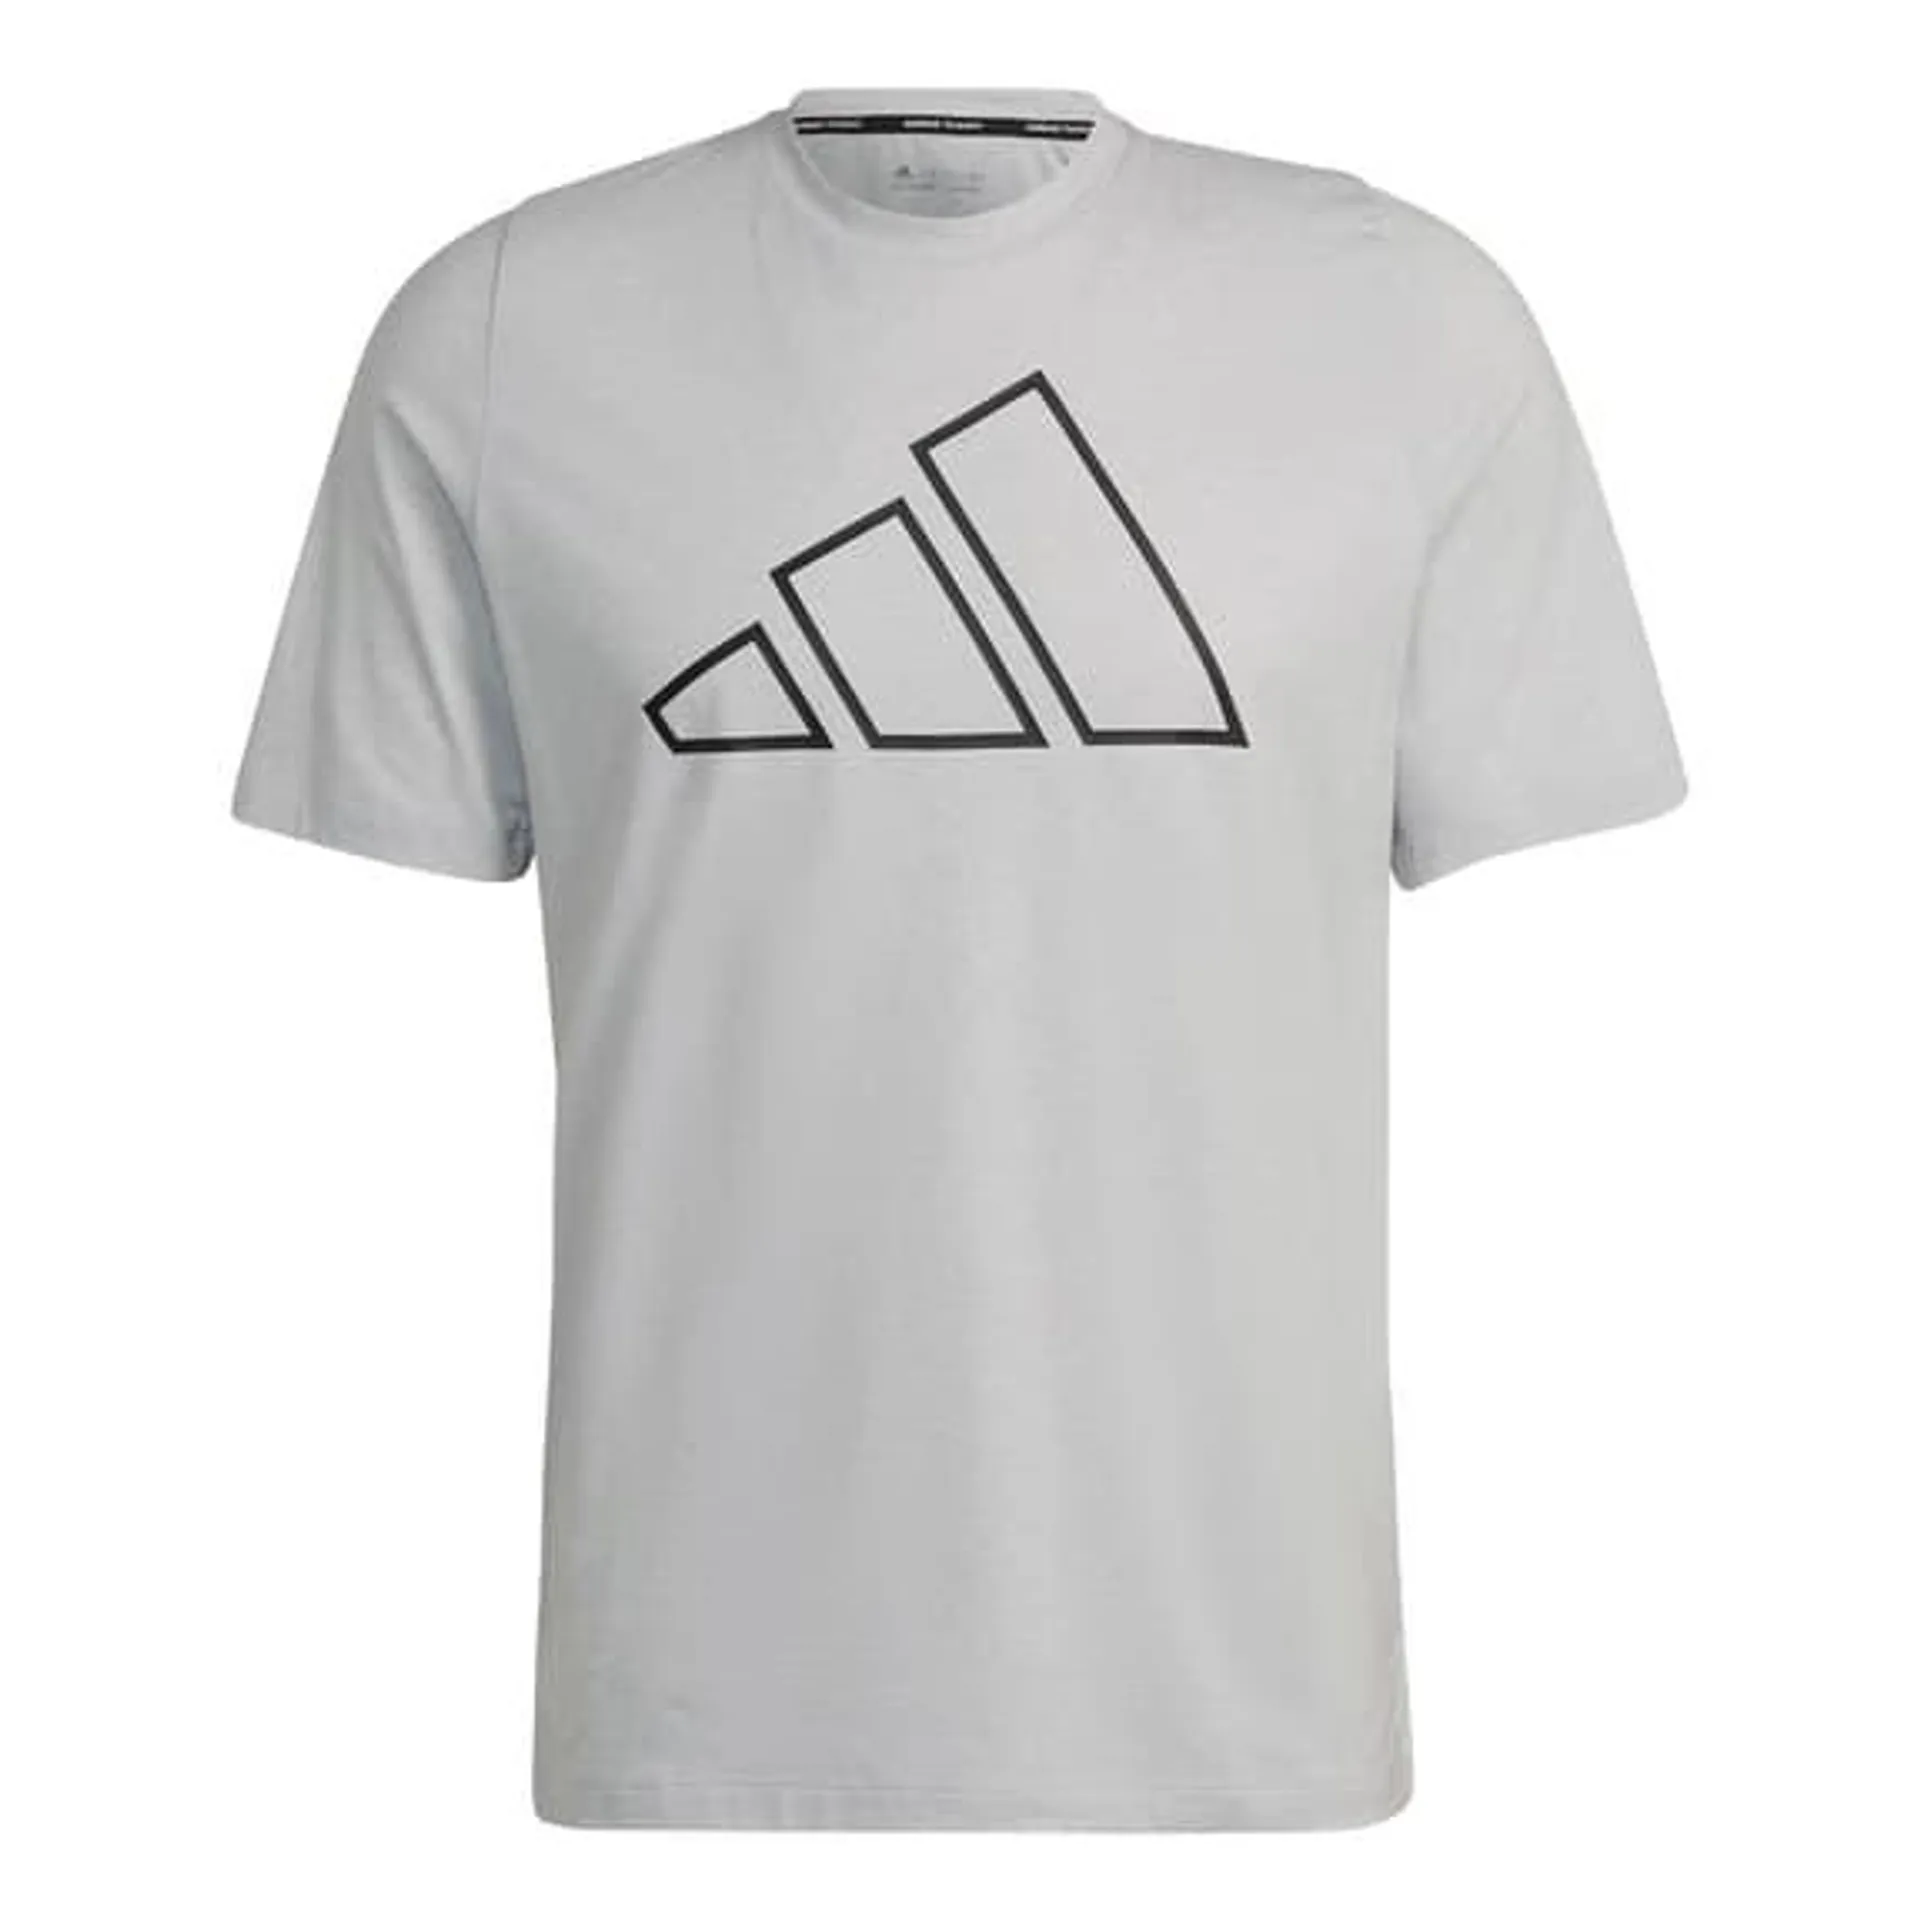 T-shirt adidas Train Icons 3S manche courte gris clair noir